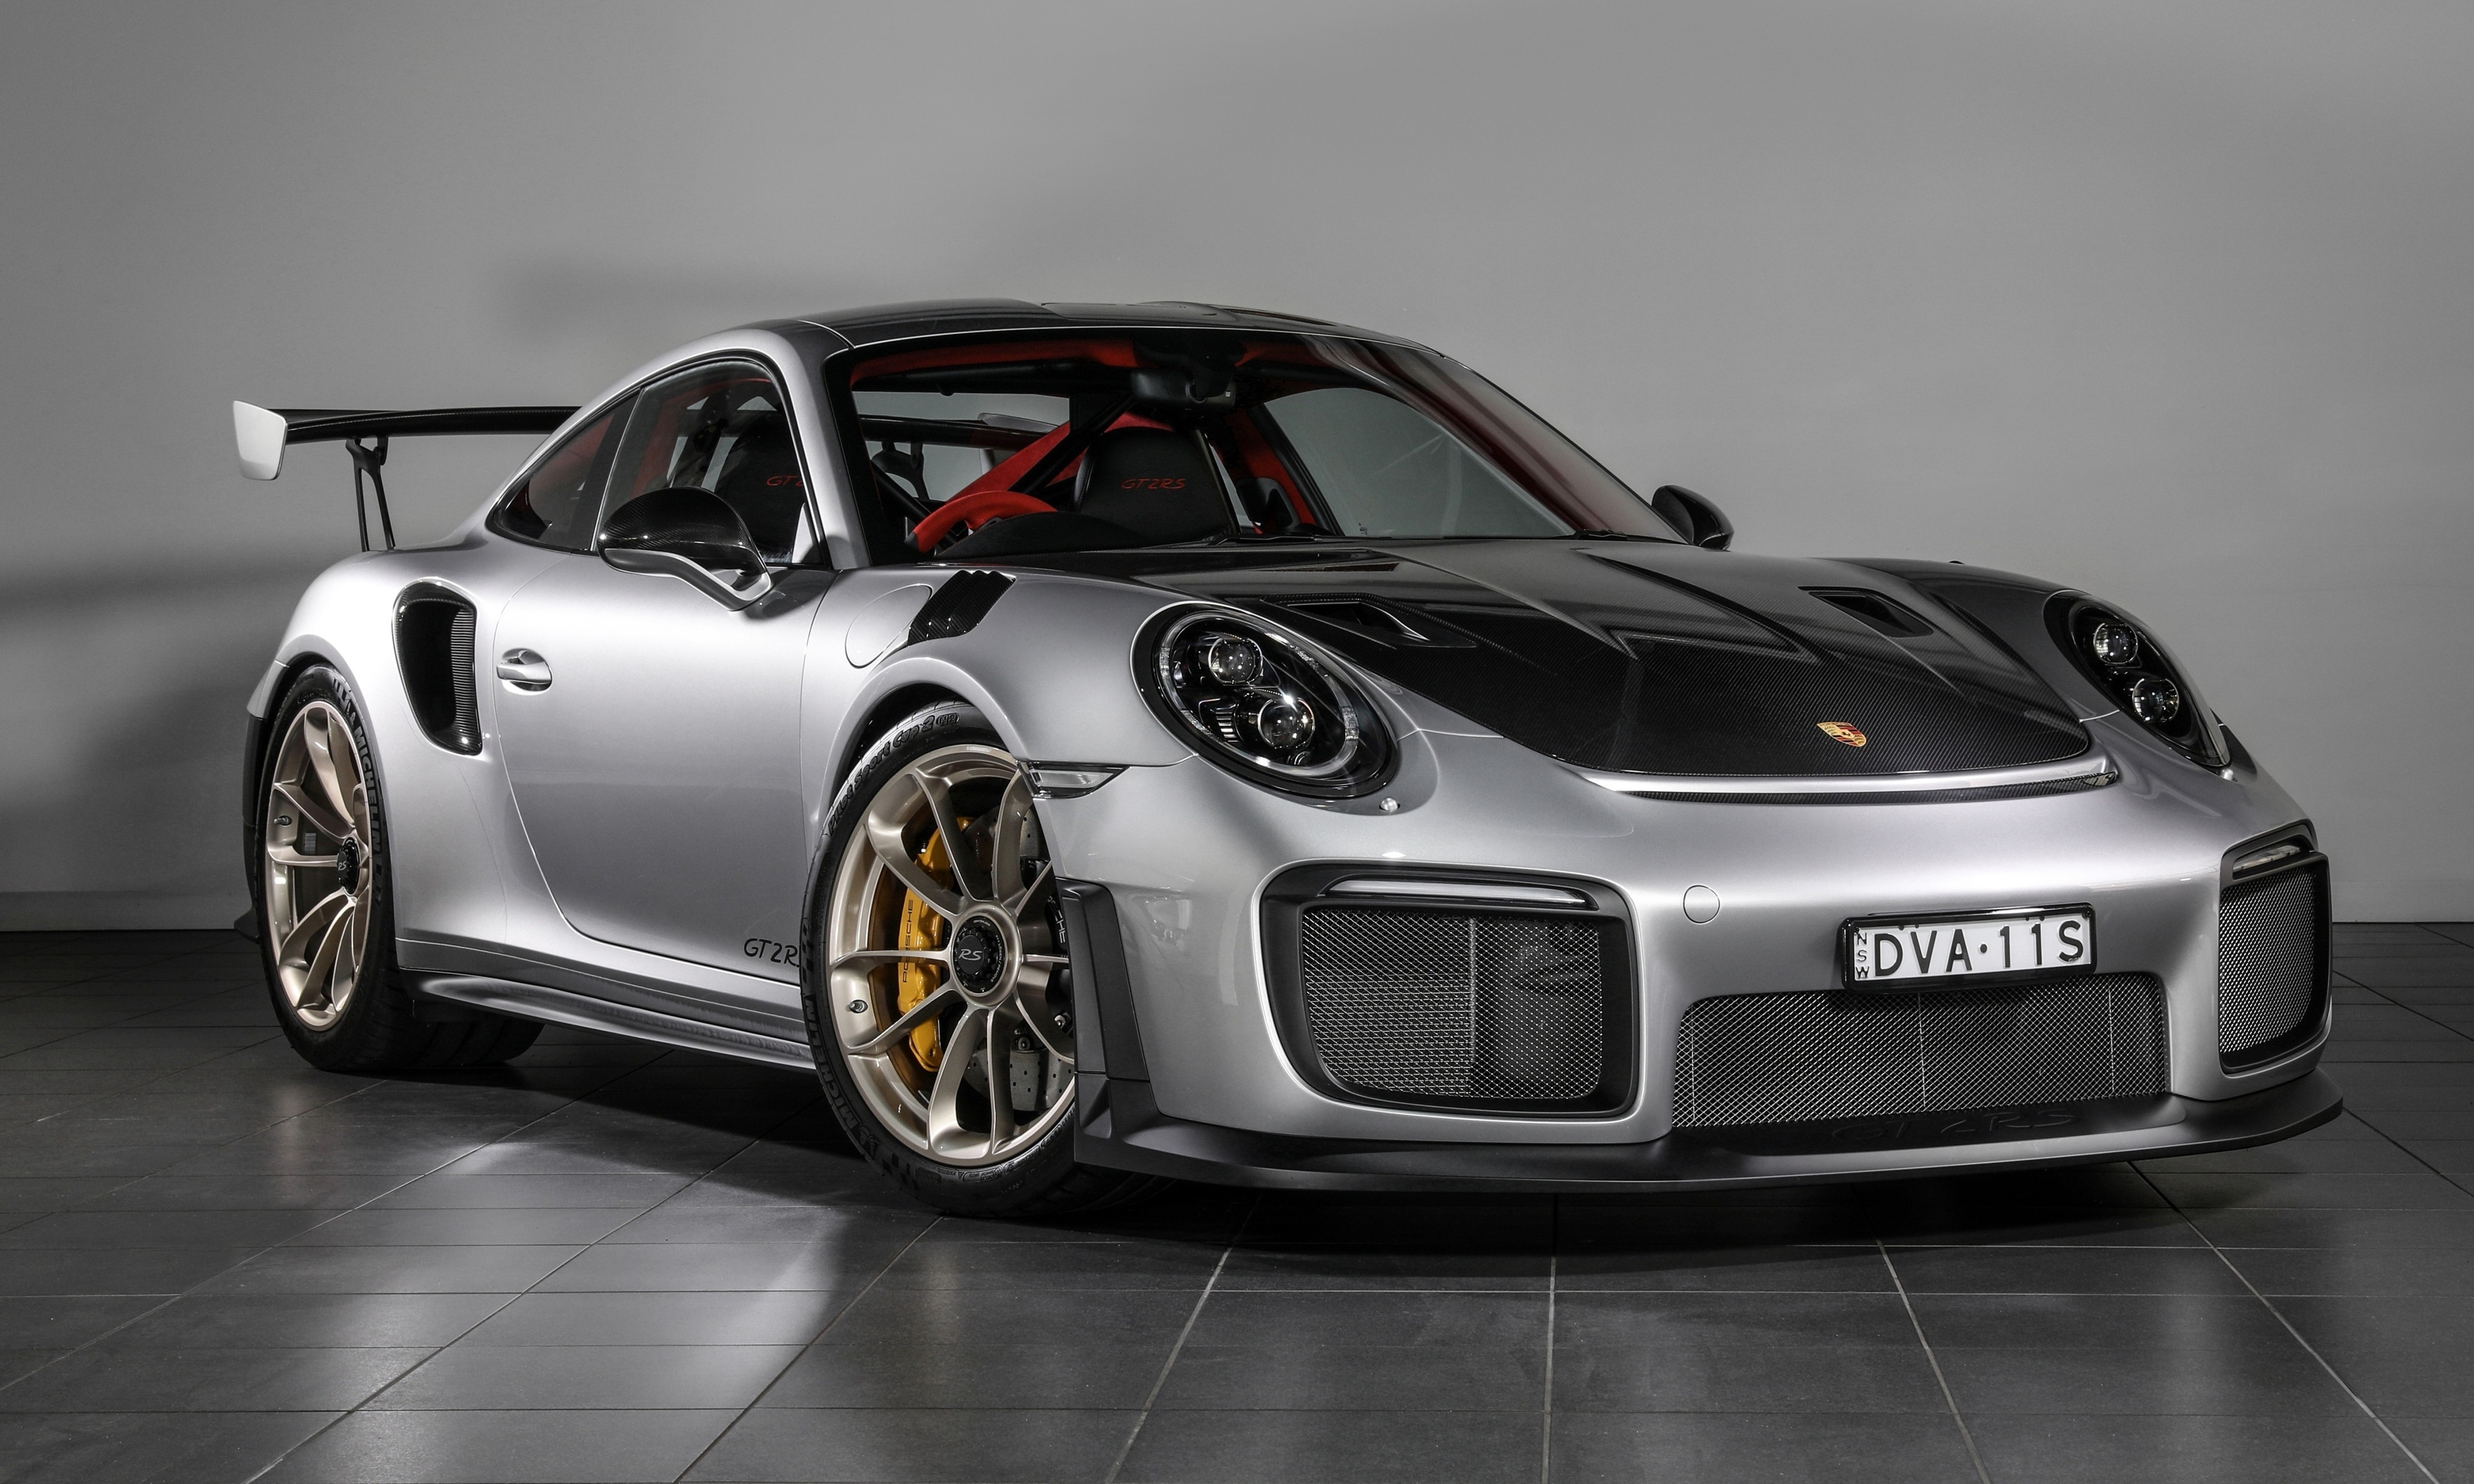 Download 3840x2400 Wallpaper 2018 Porsche 911 Gt3 Rs Grey Sports Car 4k Ultra Hd 16 10 Widescreen 3840x2400 Hd Image Background 5275